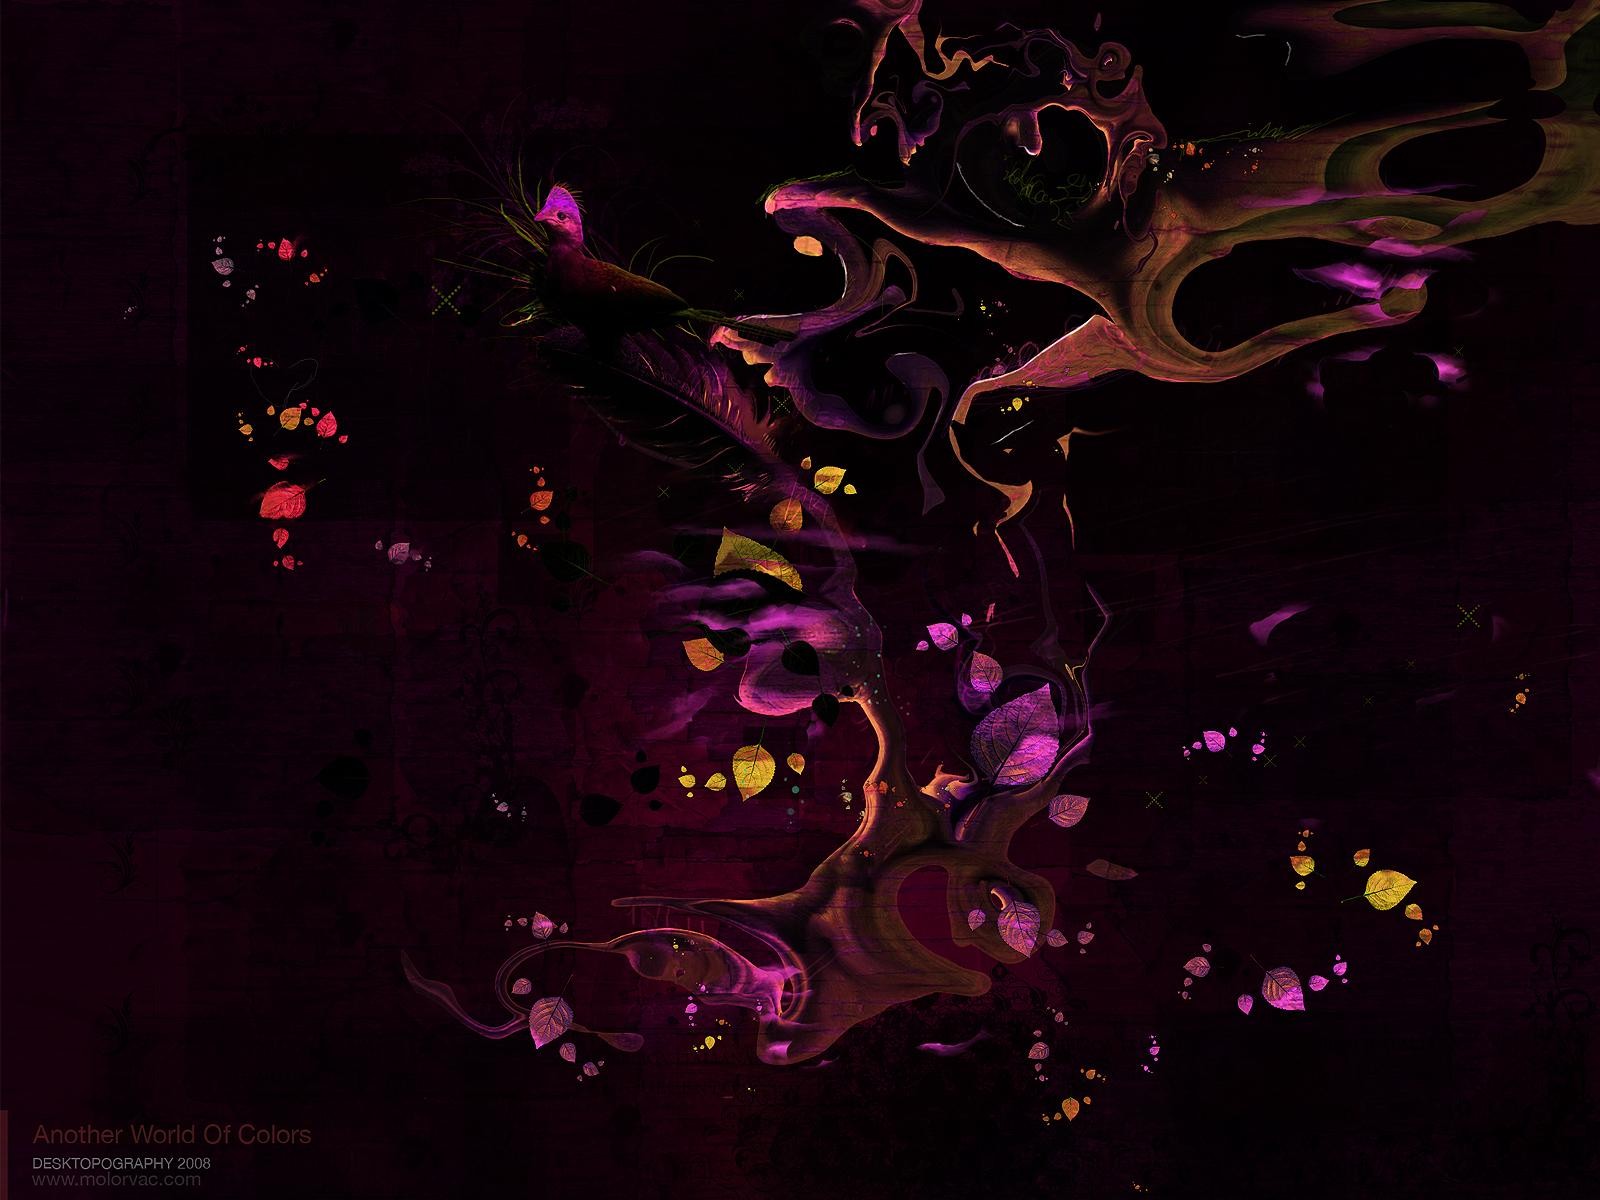 General 1600x1200 digital art abstract 2008 (Year) purple purple background shapes swirls